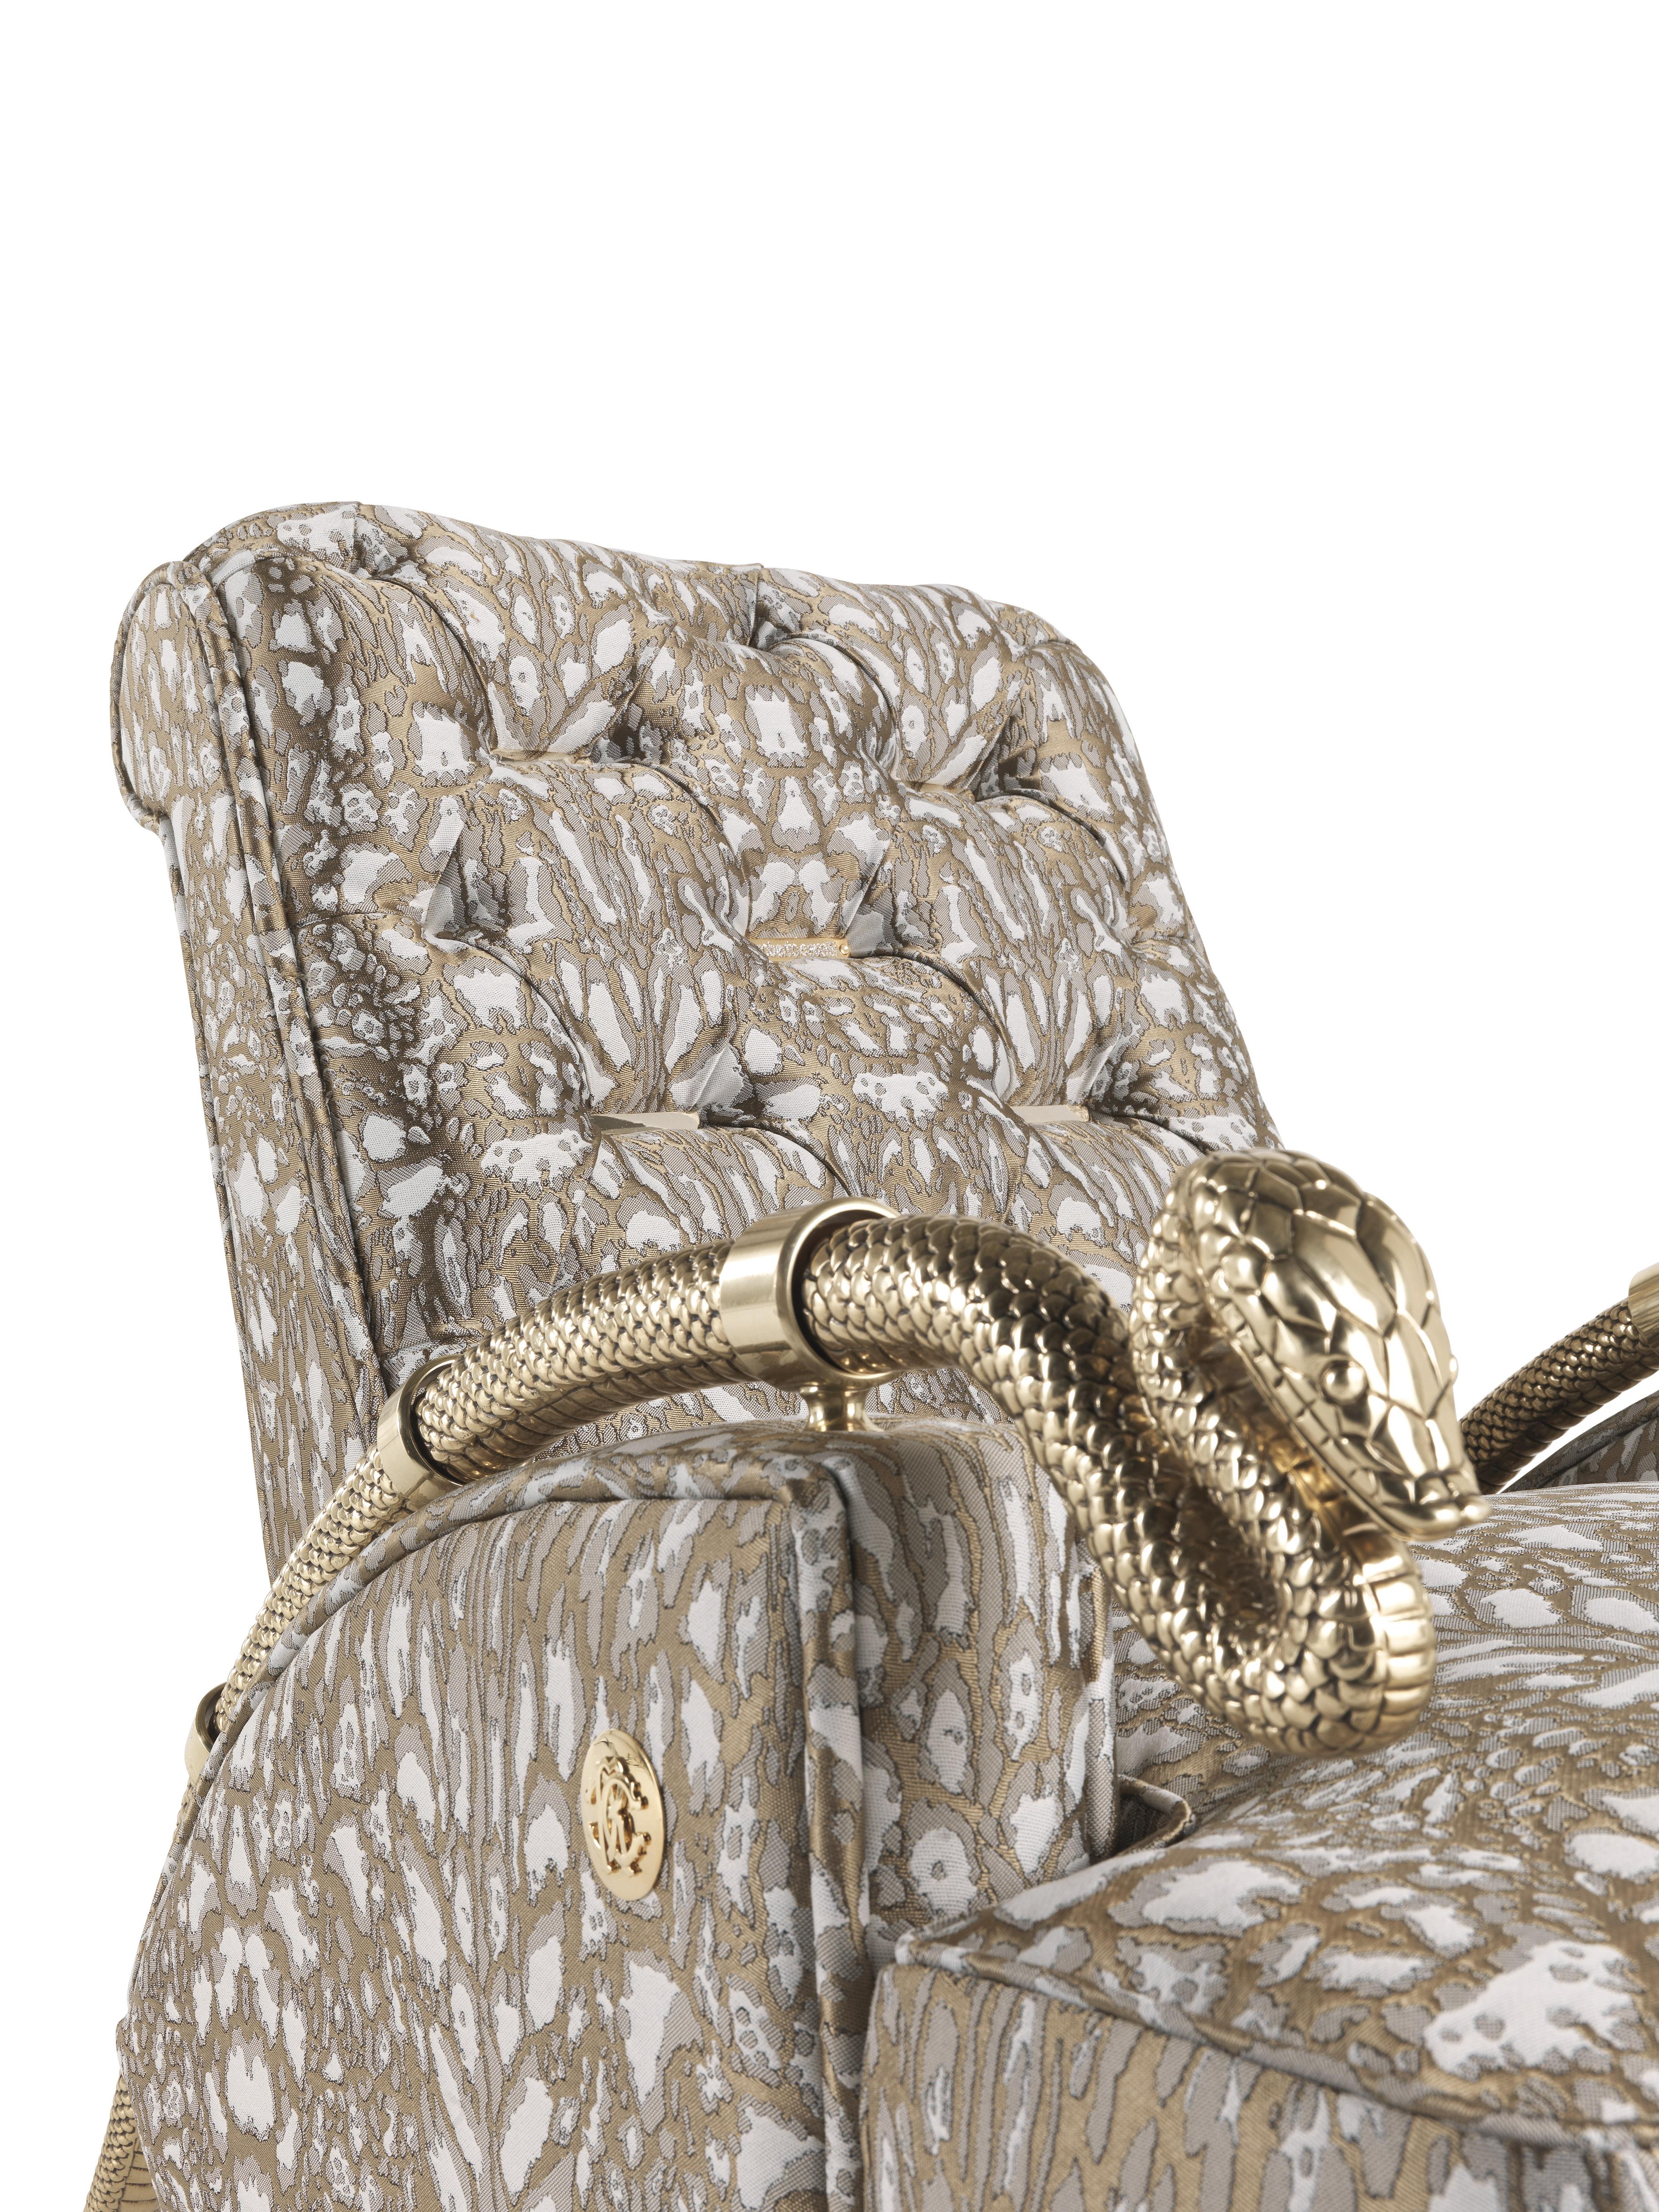 snake chair